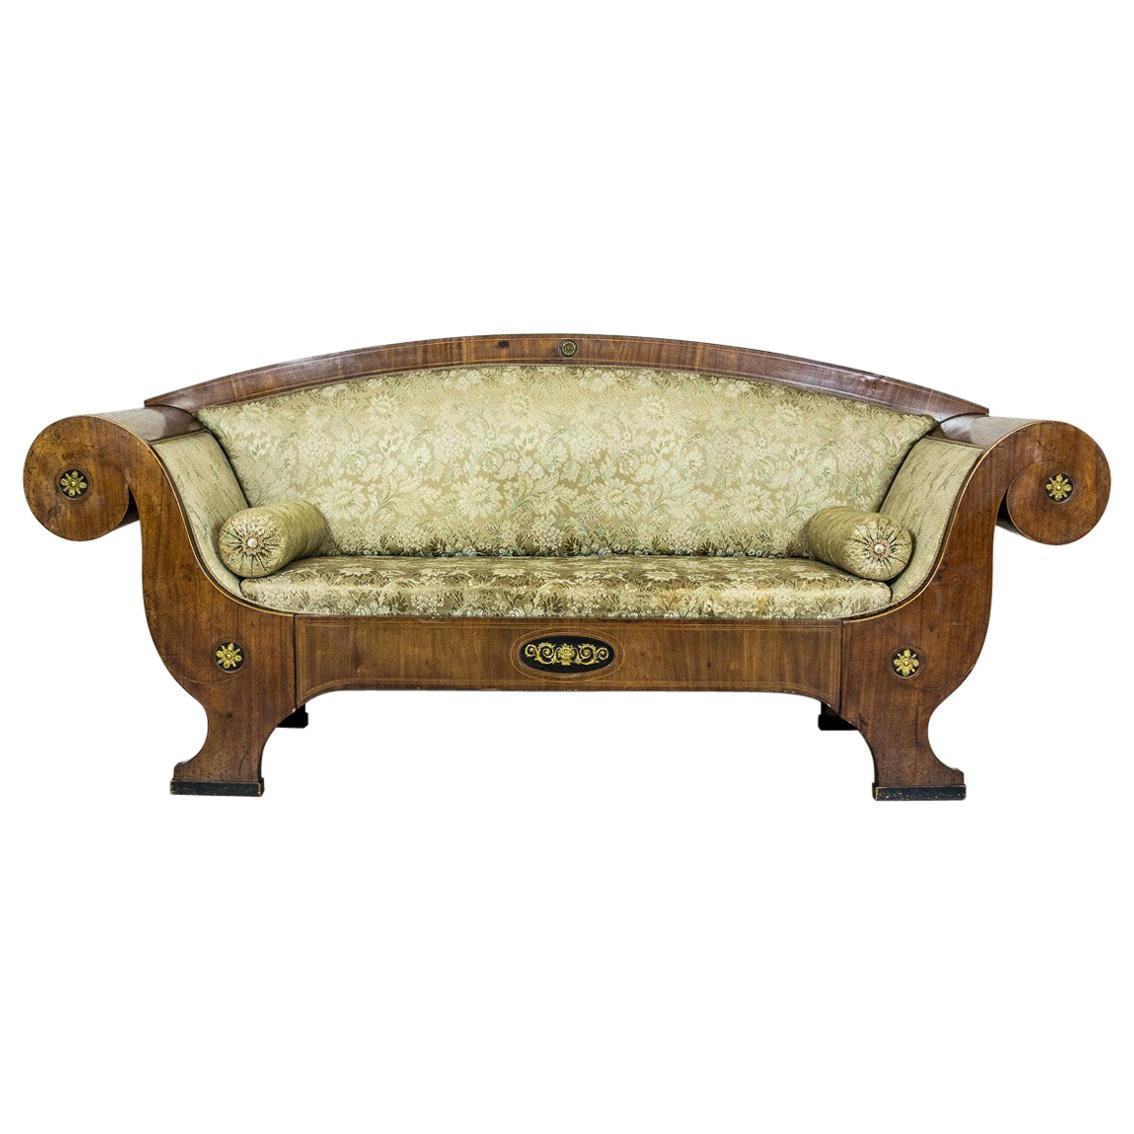 Antique Large  Biedermeier Sofa in Green with brass details, circa 1860